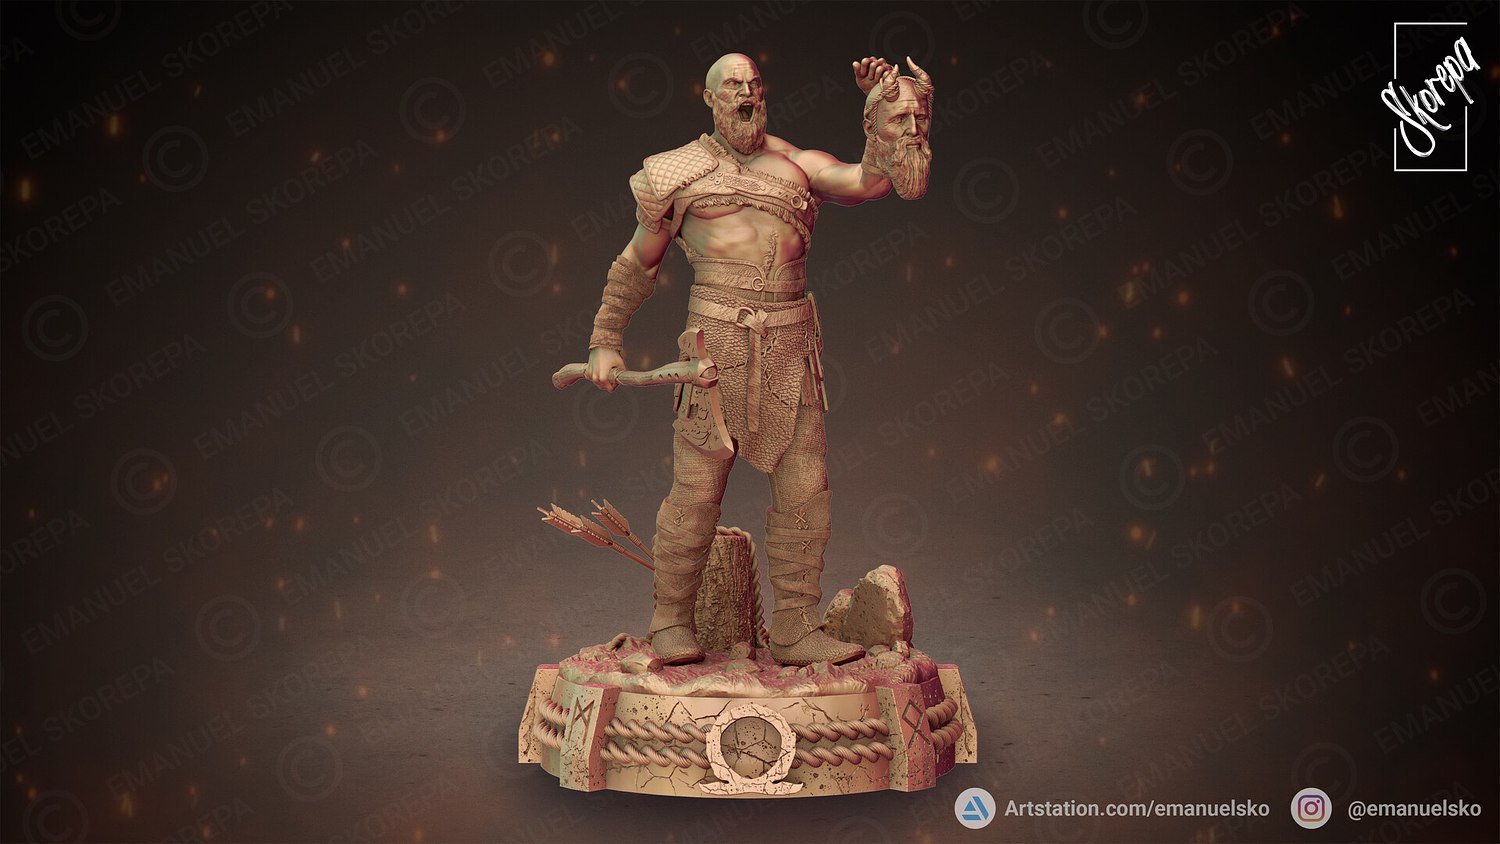 Kratos V2 from God of War